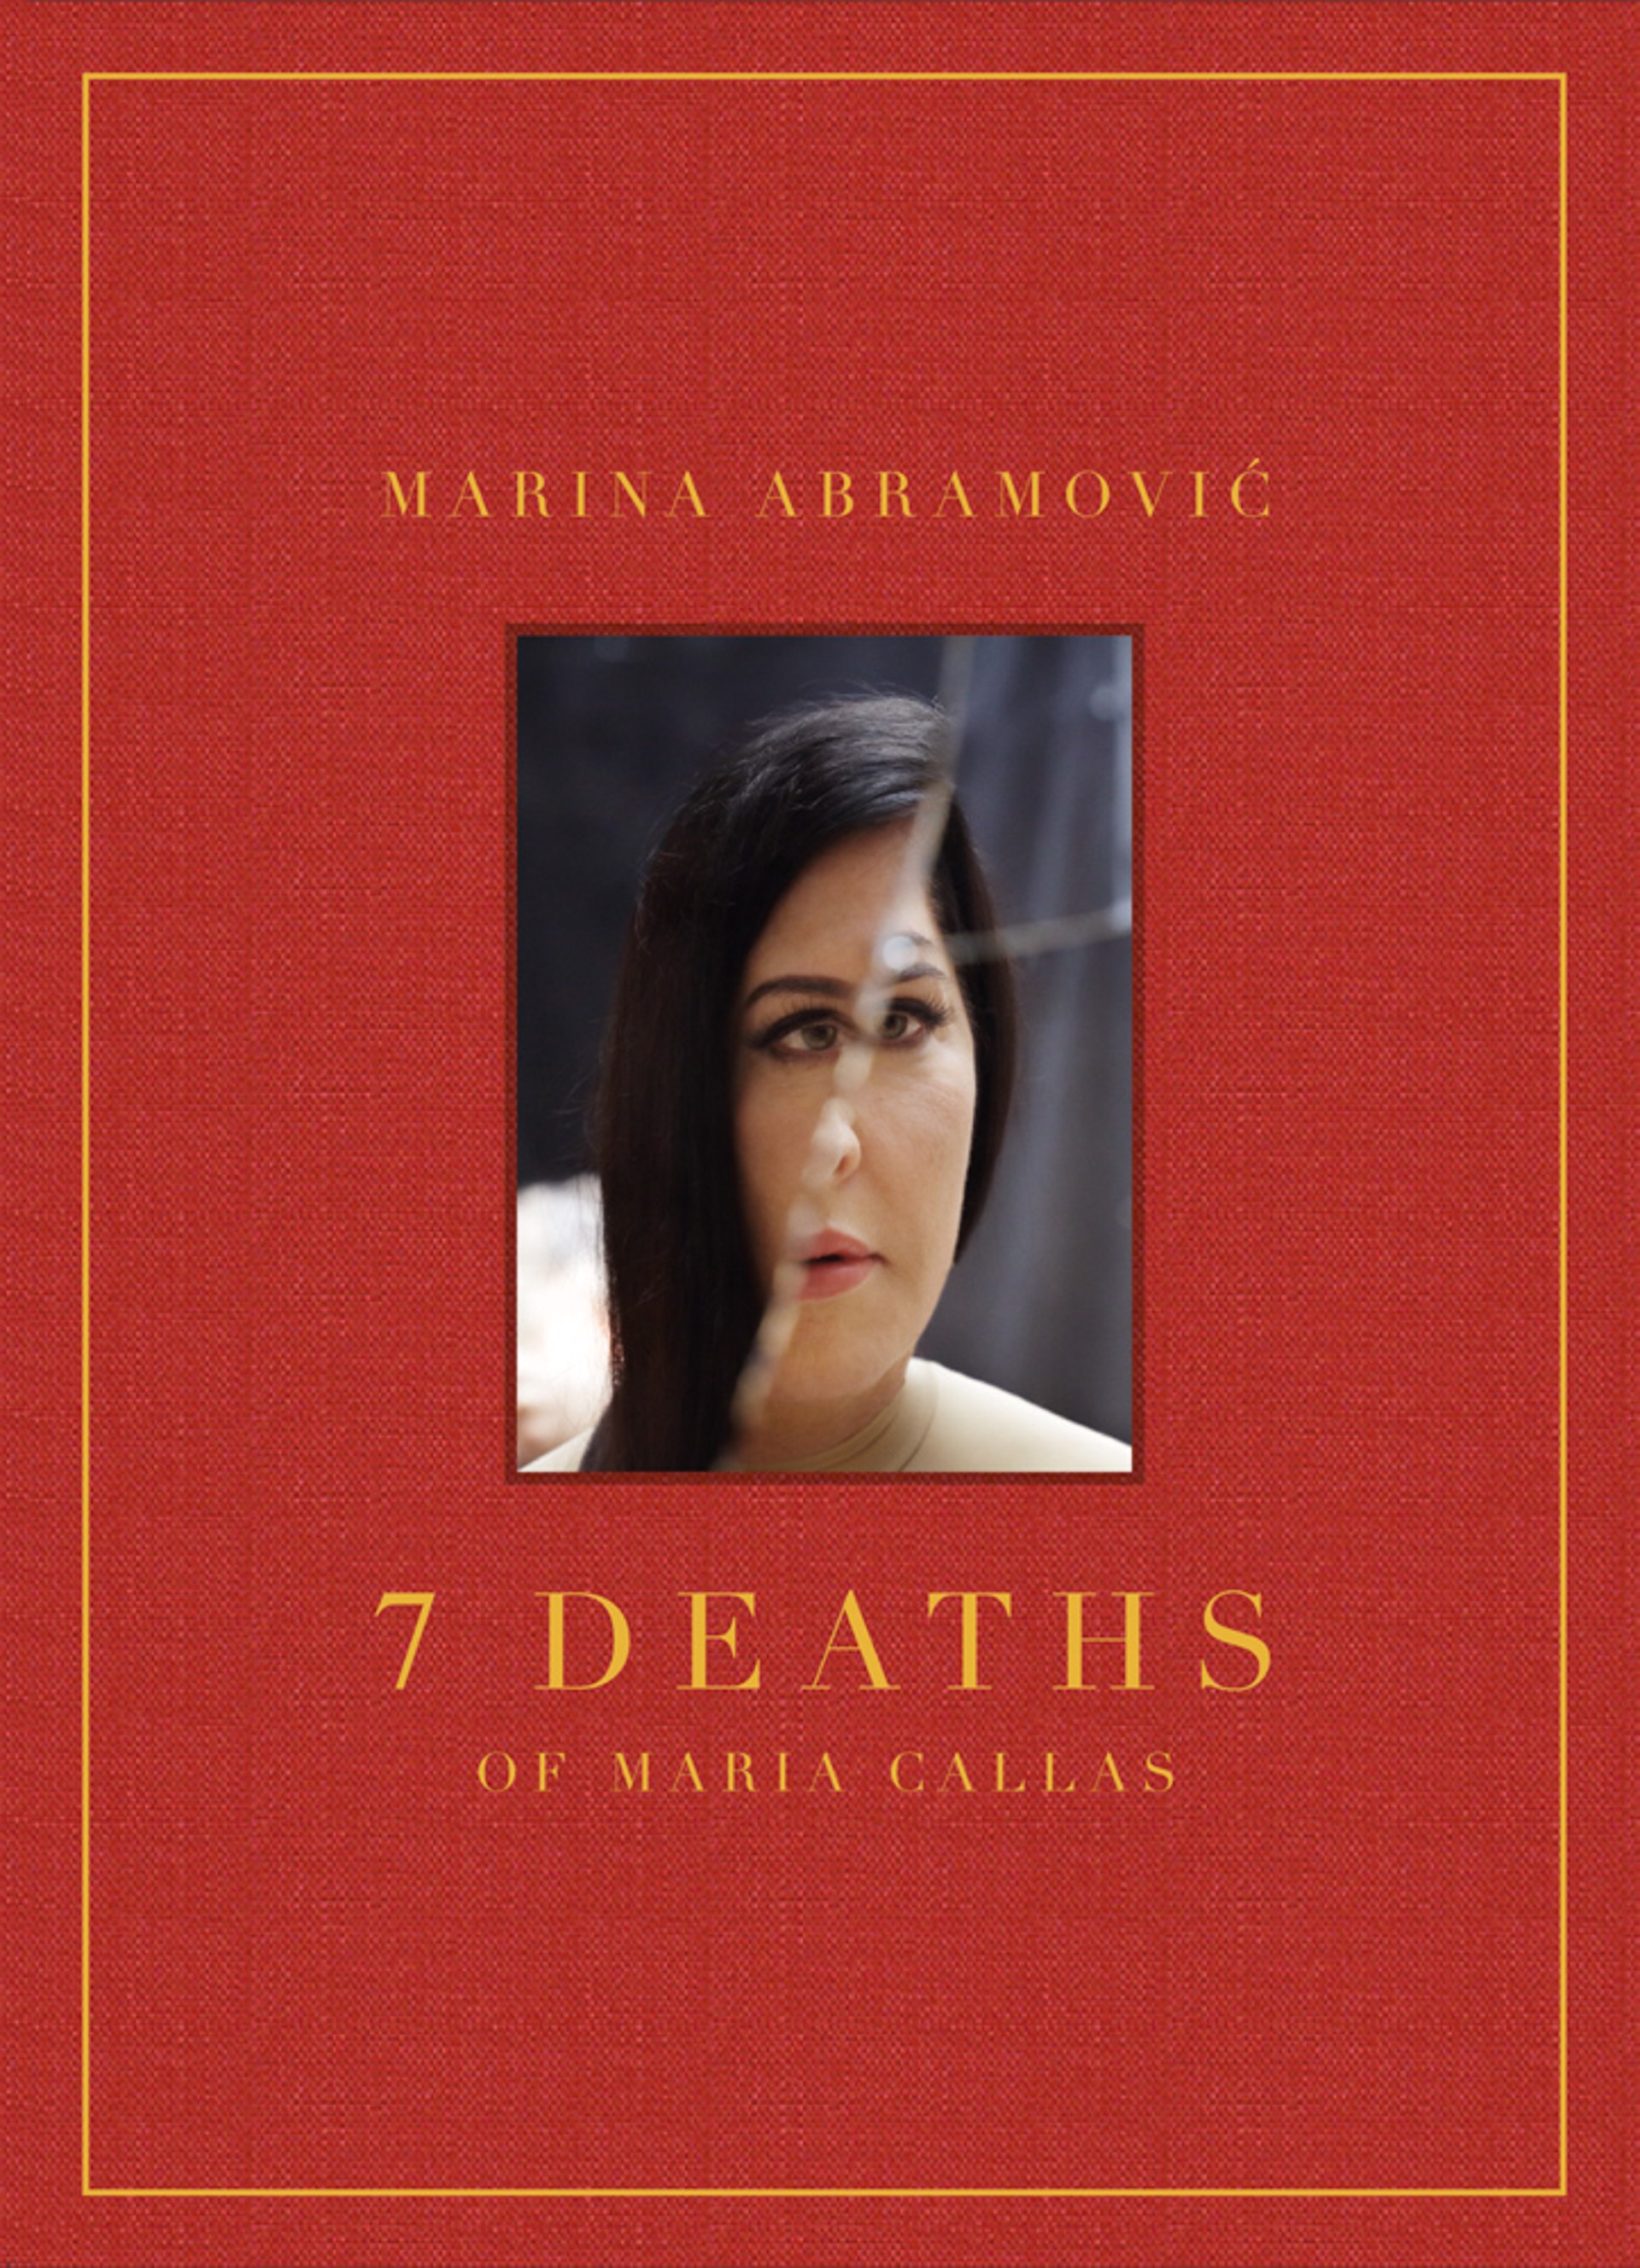 7 Deaths of Maria Callas  by Marina Abramovic